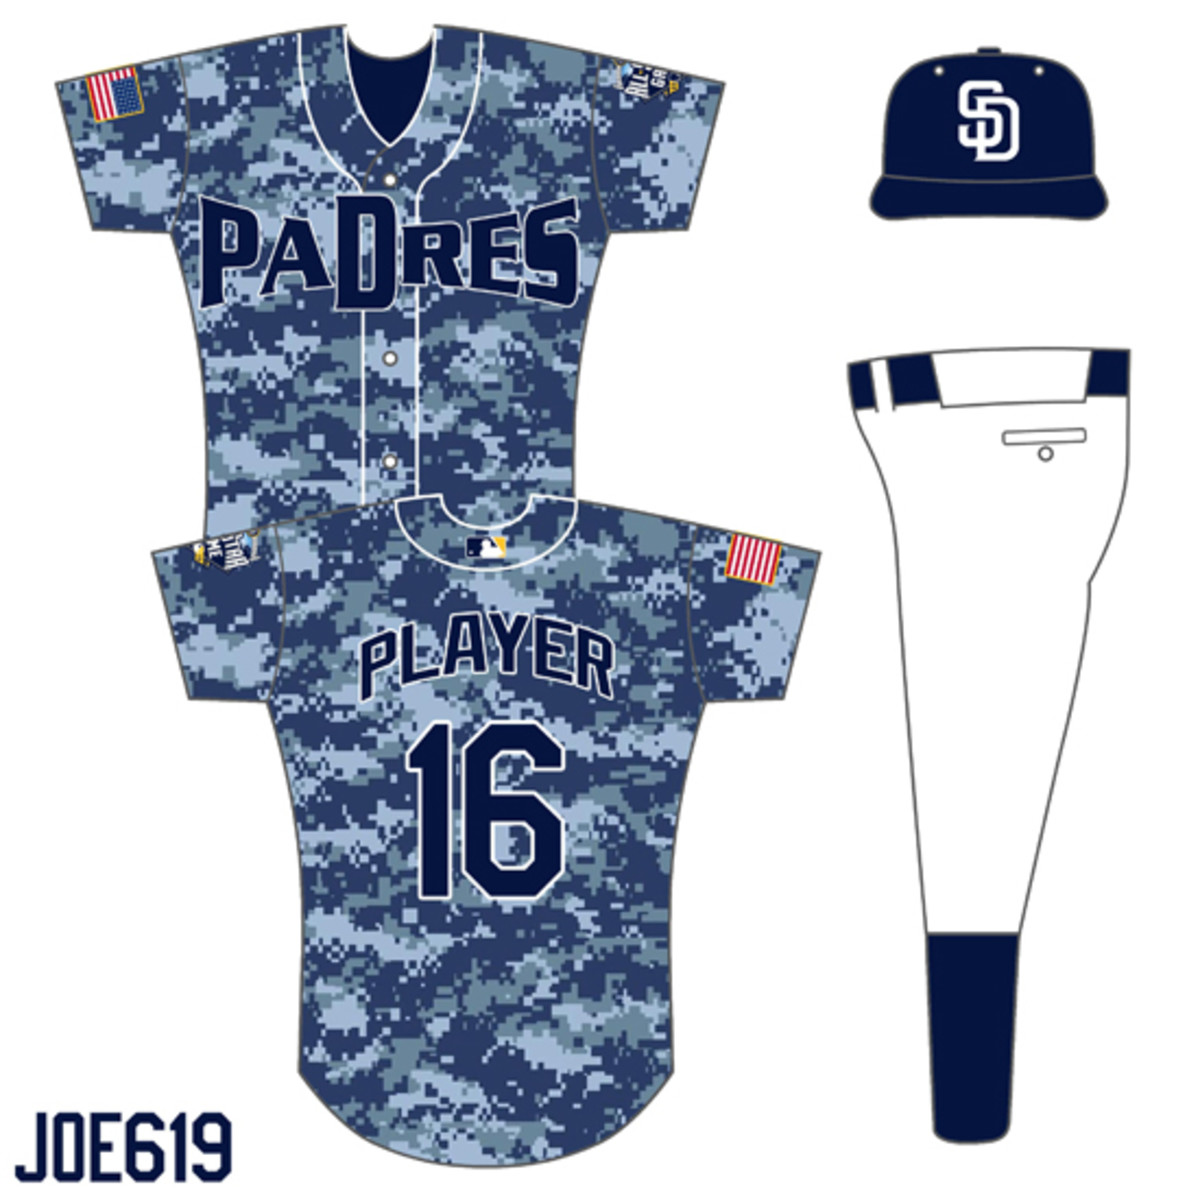 San Diego Padres Camo Uniforms  Petco Park Insider - San Diego Padres